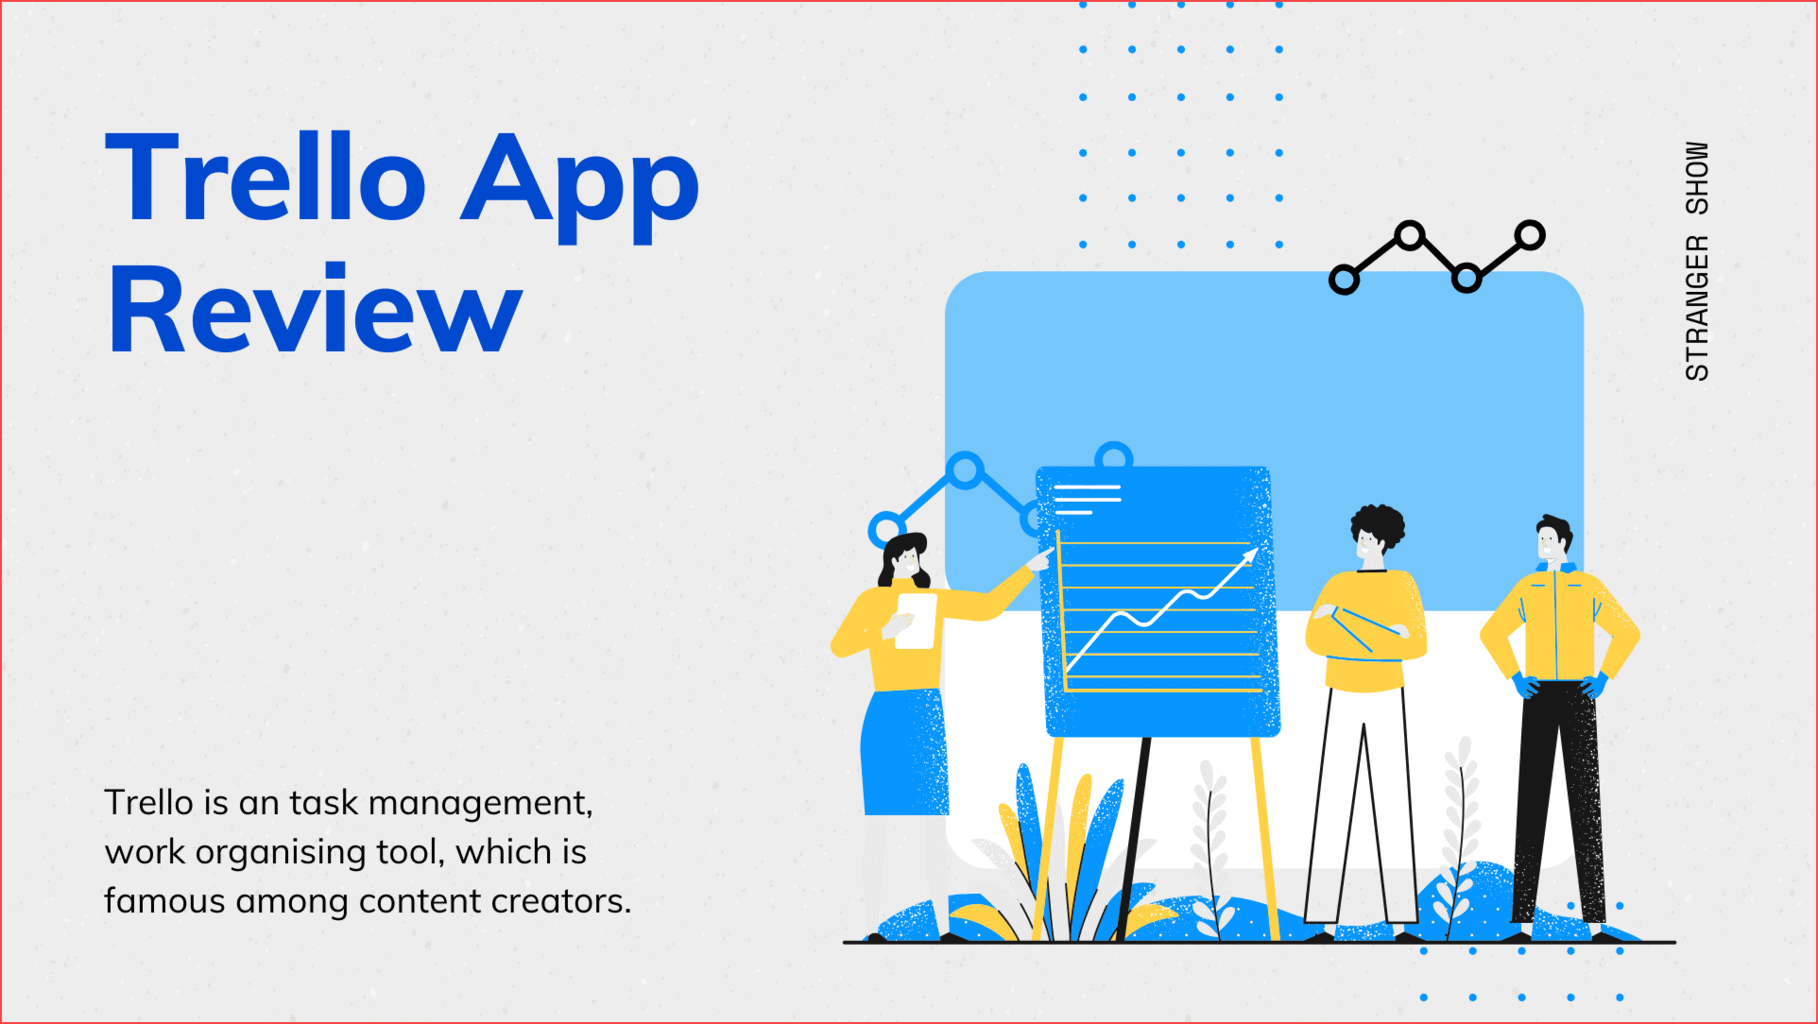 Trello App Review for creators